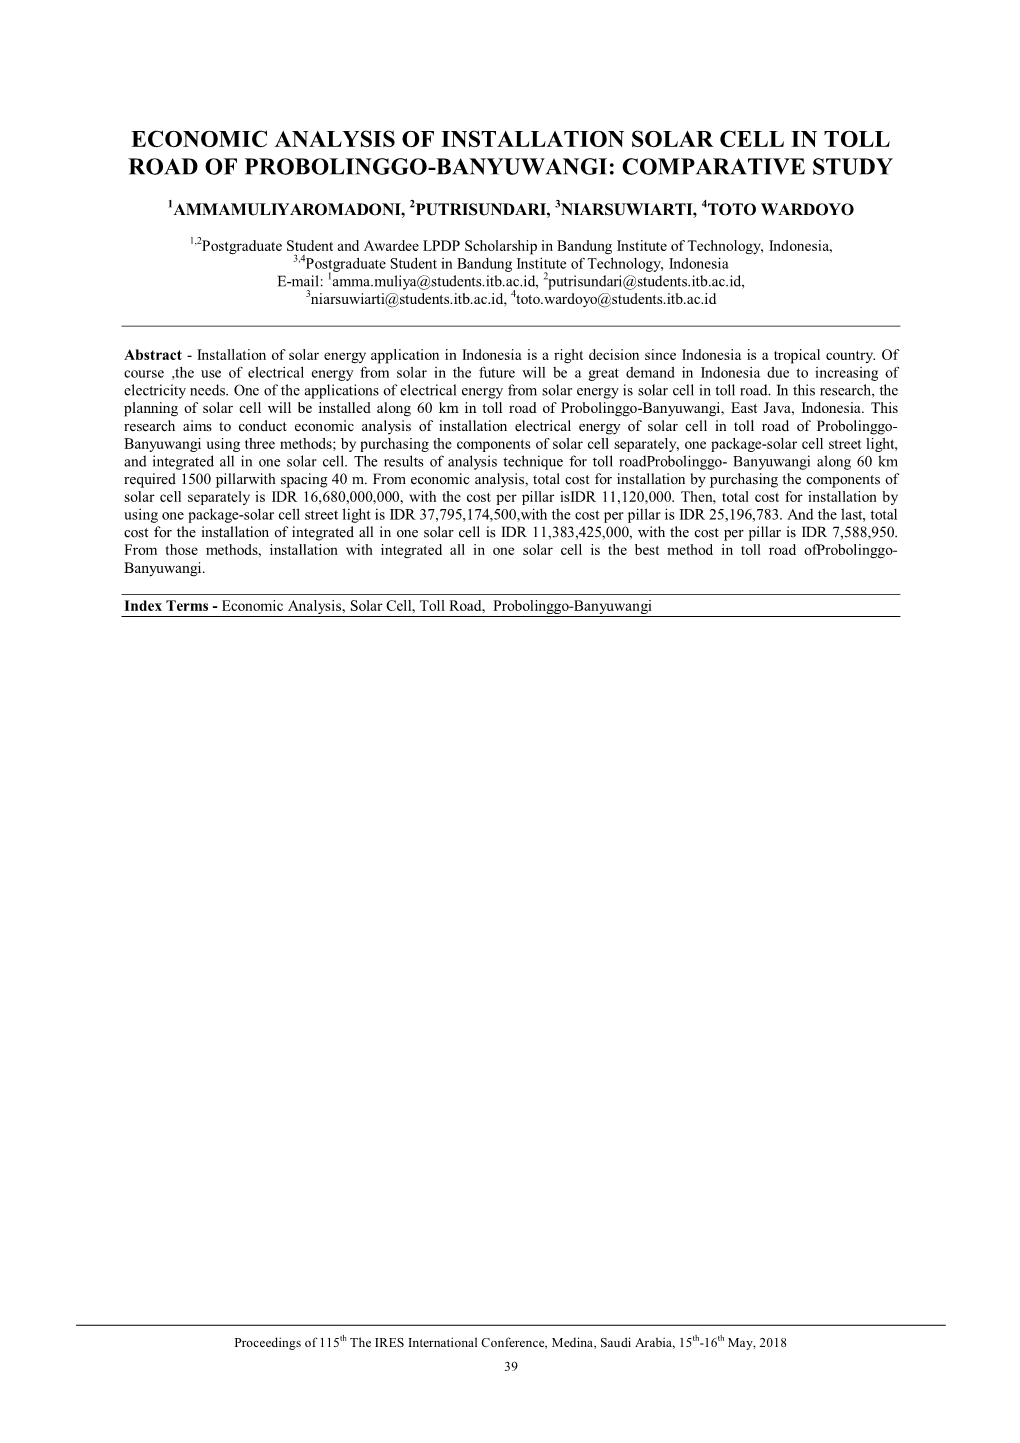 Economic Analysis of Installation Solar Cell in Toll Road of Probolinggo-Banyuwangi: Comparative Study